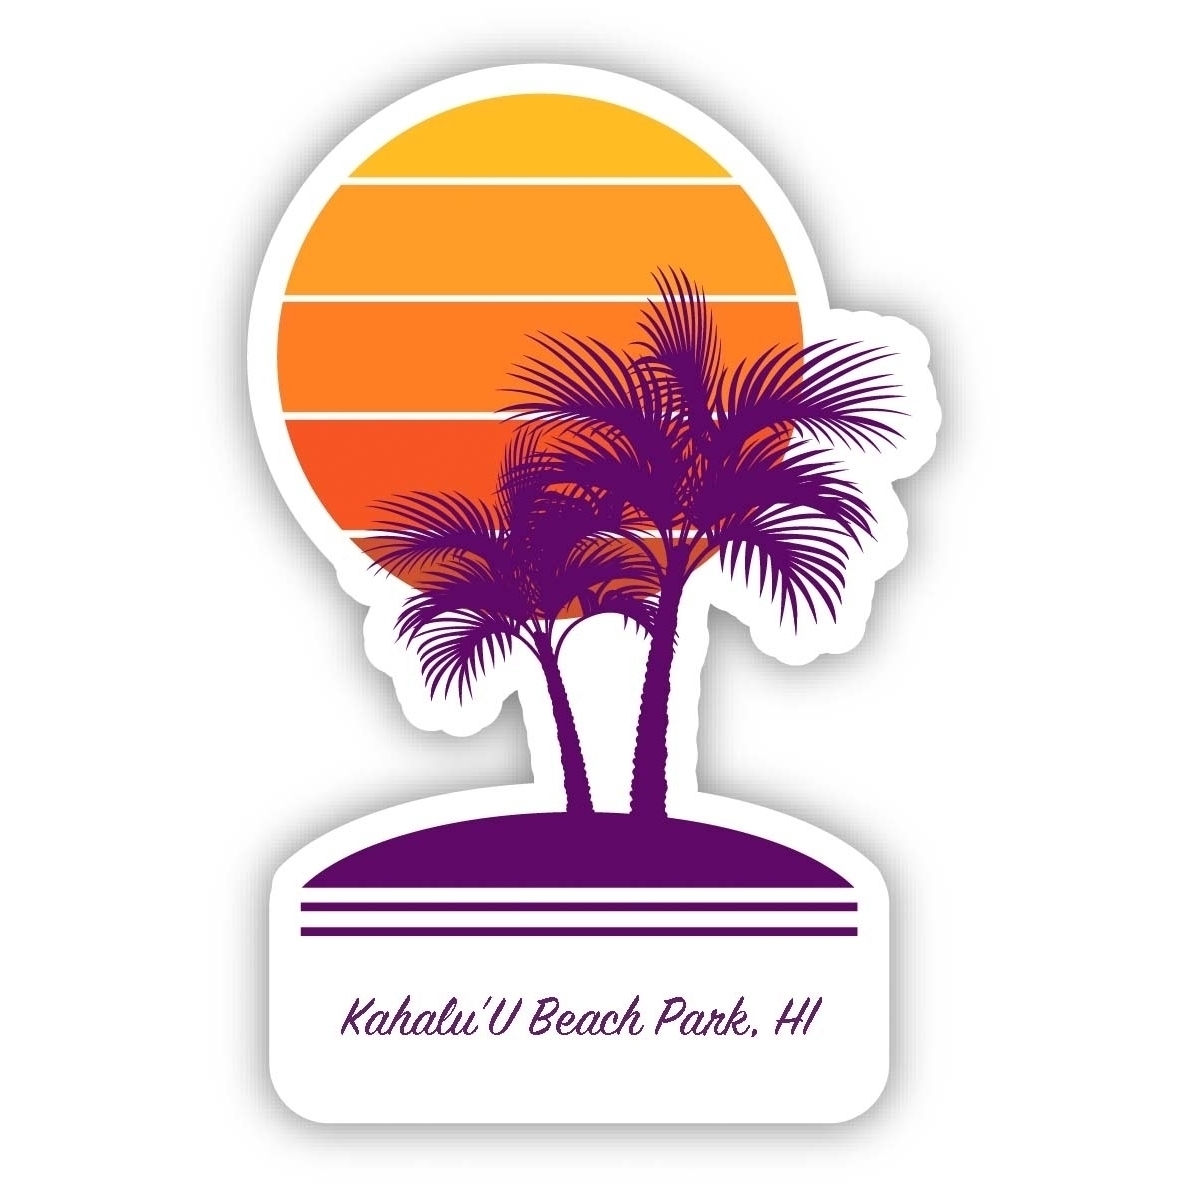 KahaluâU Beach Park Hawaii Souvenir 4 Inch Vinyl Decal Sticker Palm Design